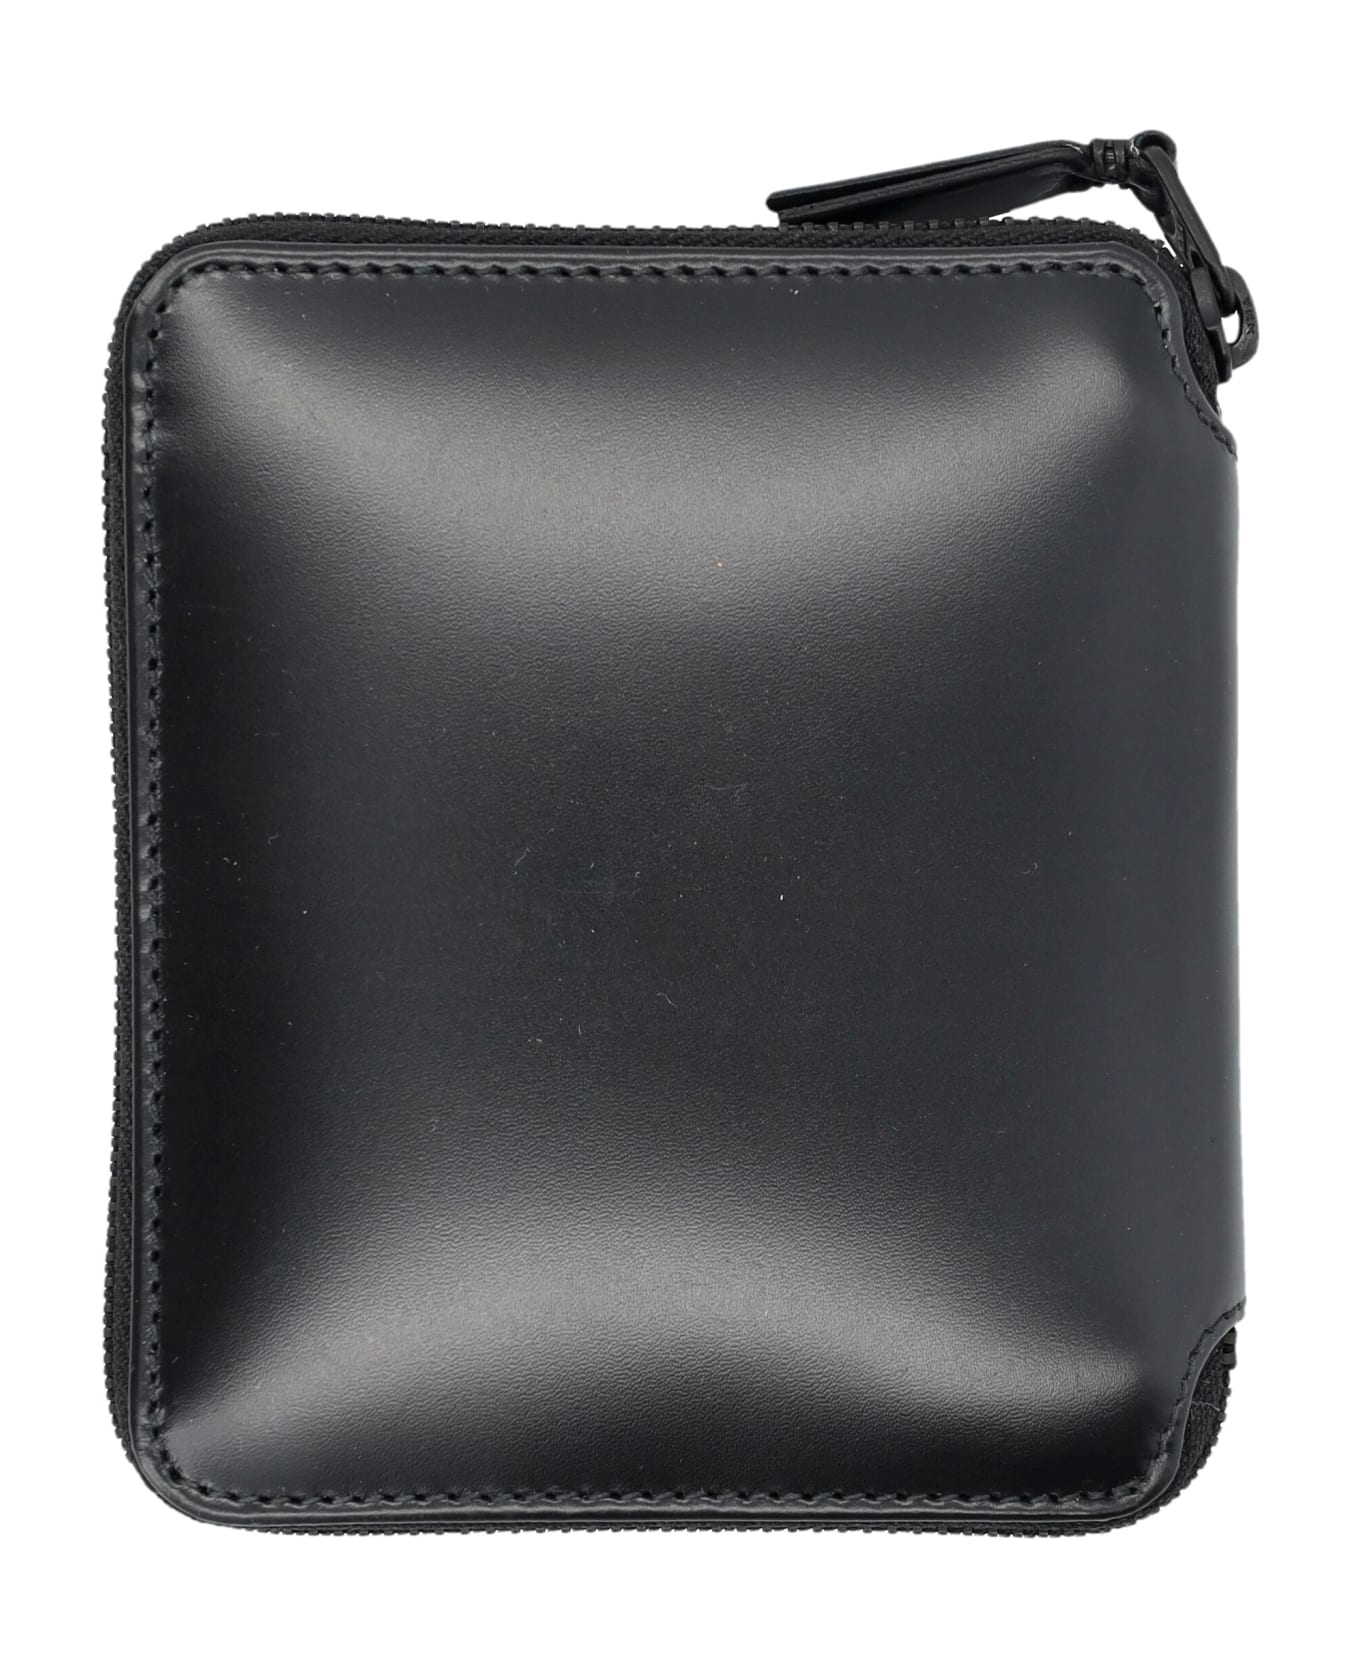 Comme des Garçons Wallet Very Black Vertical Zip Around Wallet - BLACK